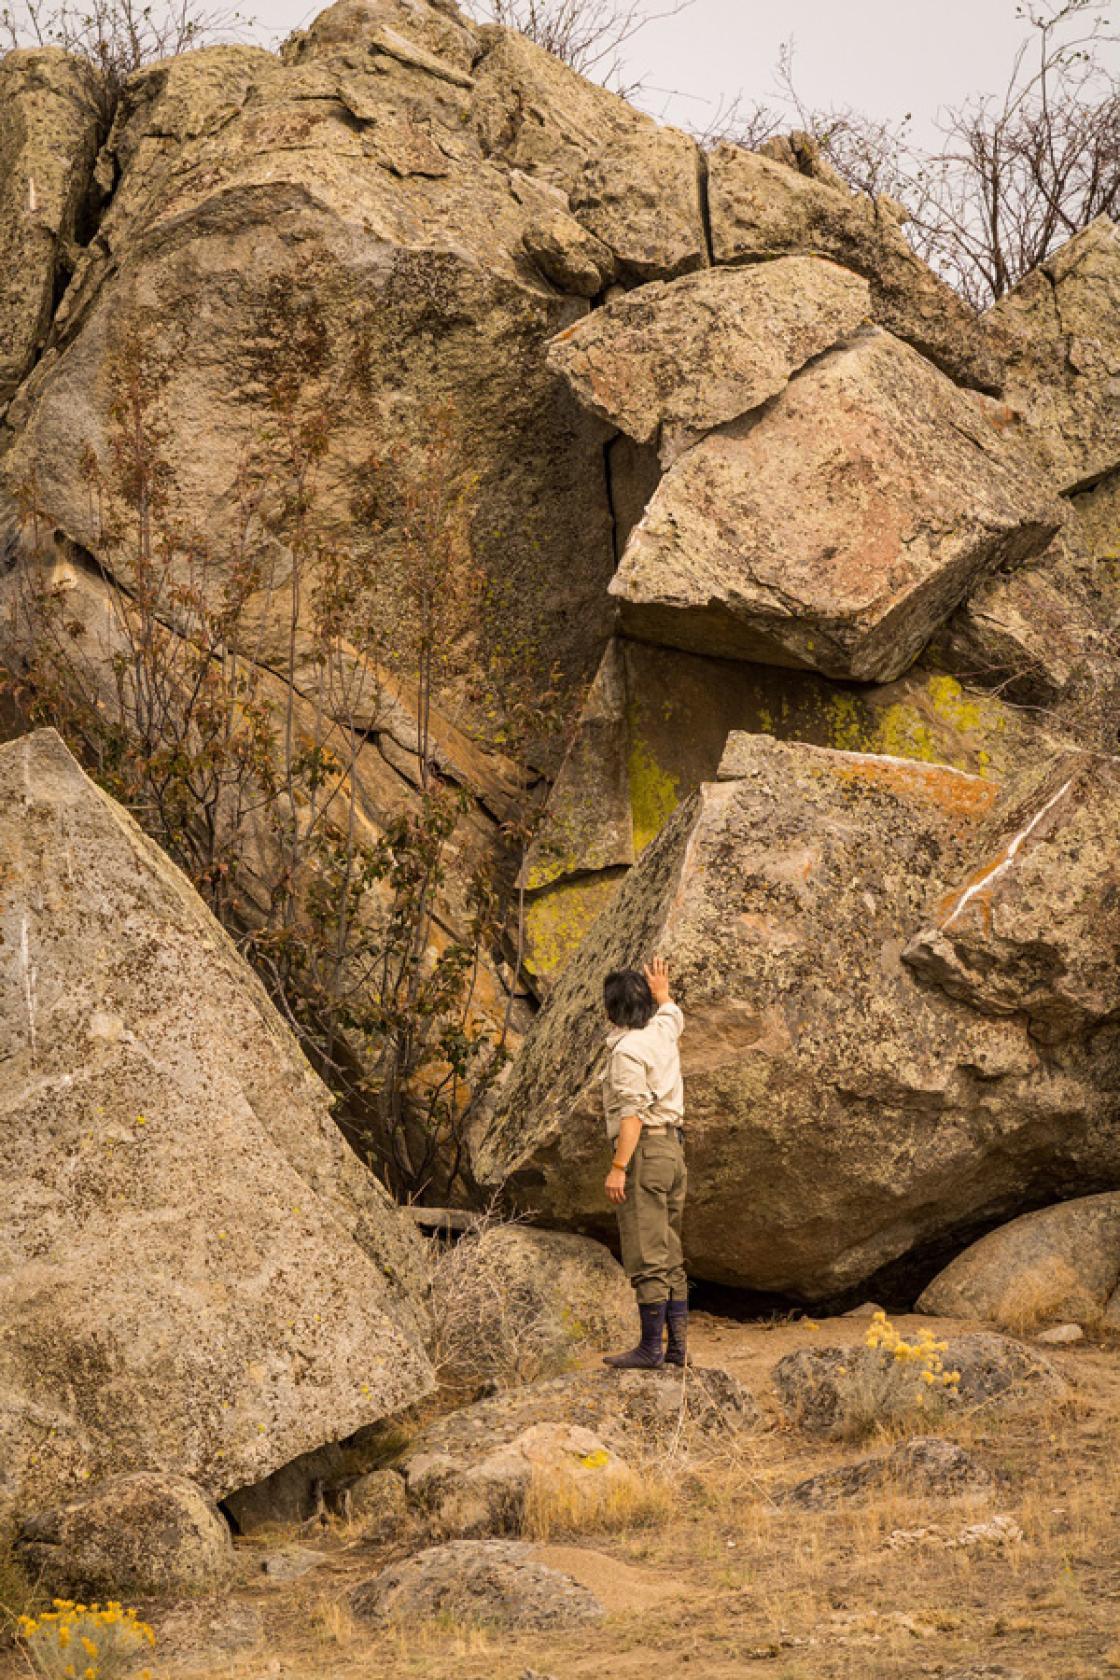 Photograph of Sadafumi Uchiyama Rock Hunting.